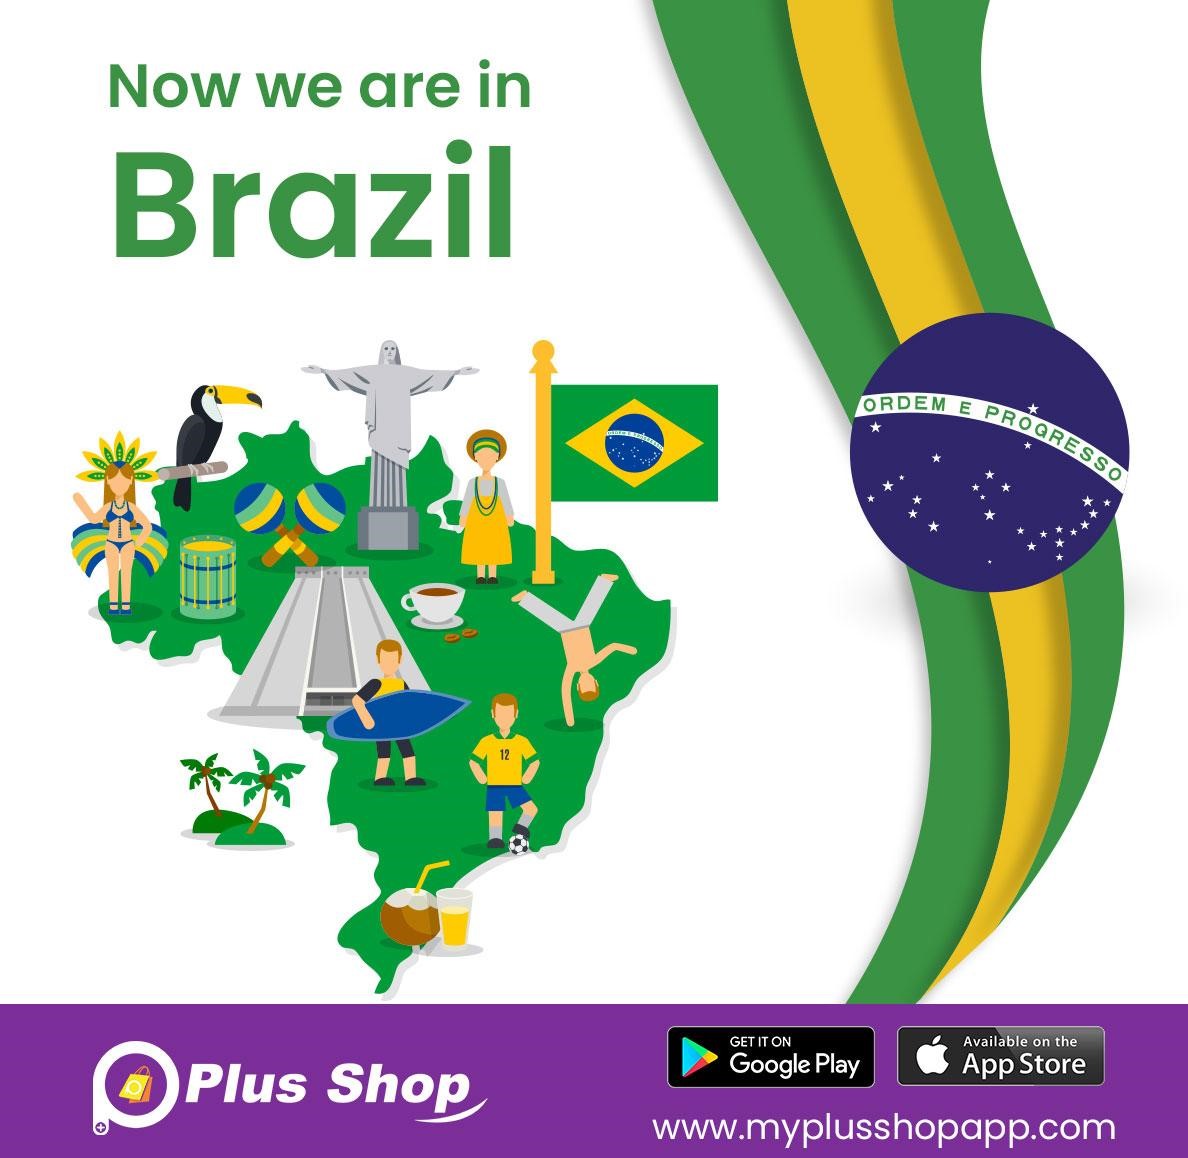 PlusShop is launching in #Brazil, so get ready #Brazilian people for the #blast. 
#plusshopinbrazil #plusshopit #brazilfoodlovers #fashionbrazil #brazildeliveryapp  #onlinebusinessplatform #deliveryappbrazil